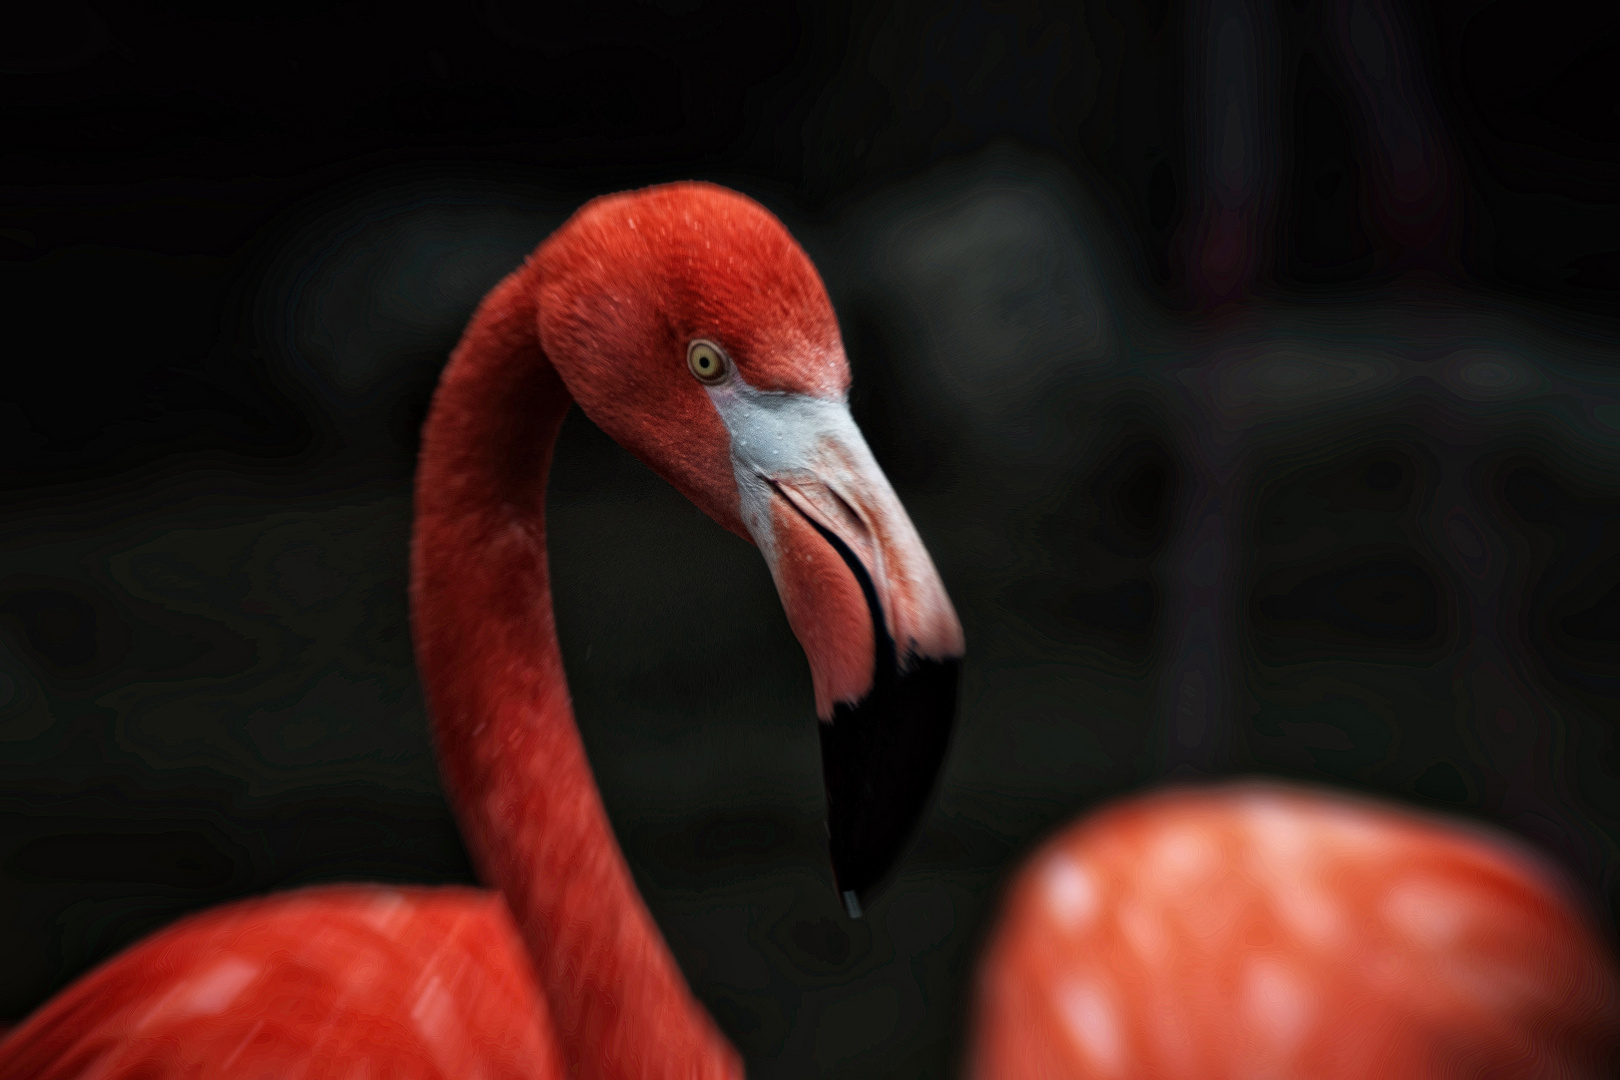 Roter Flamingo